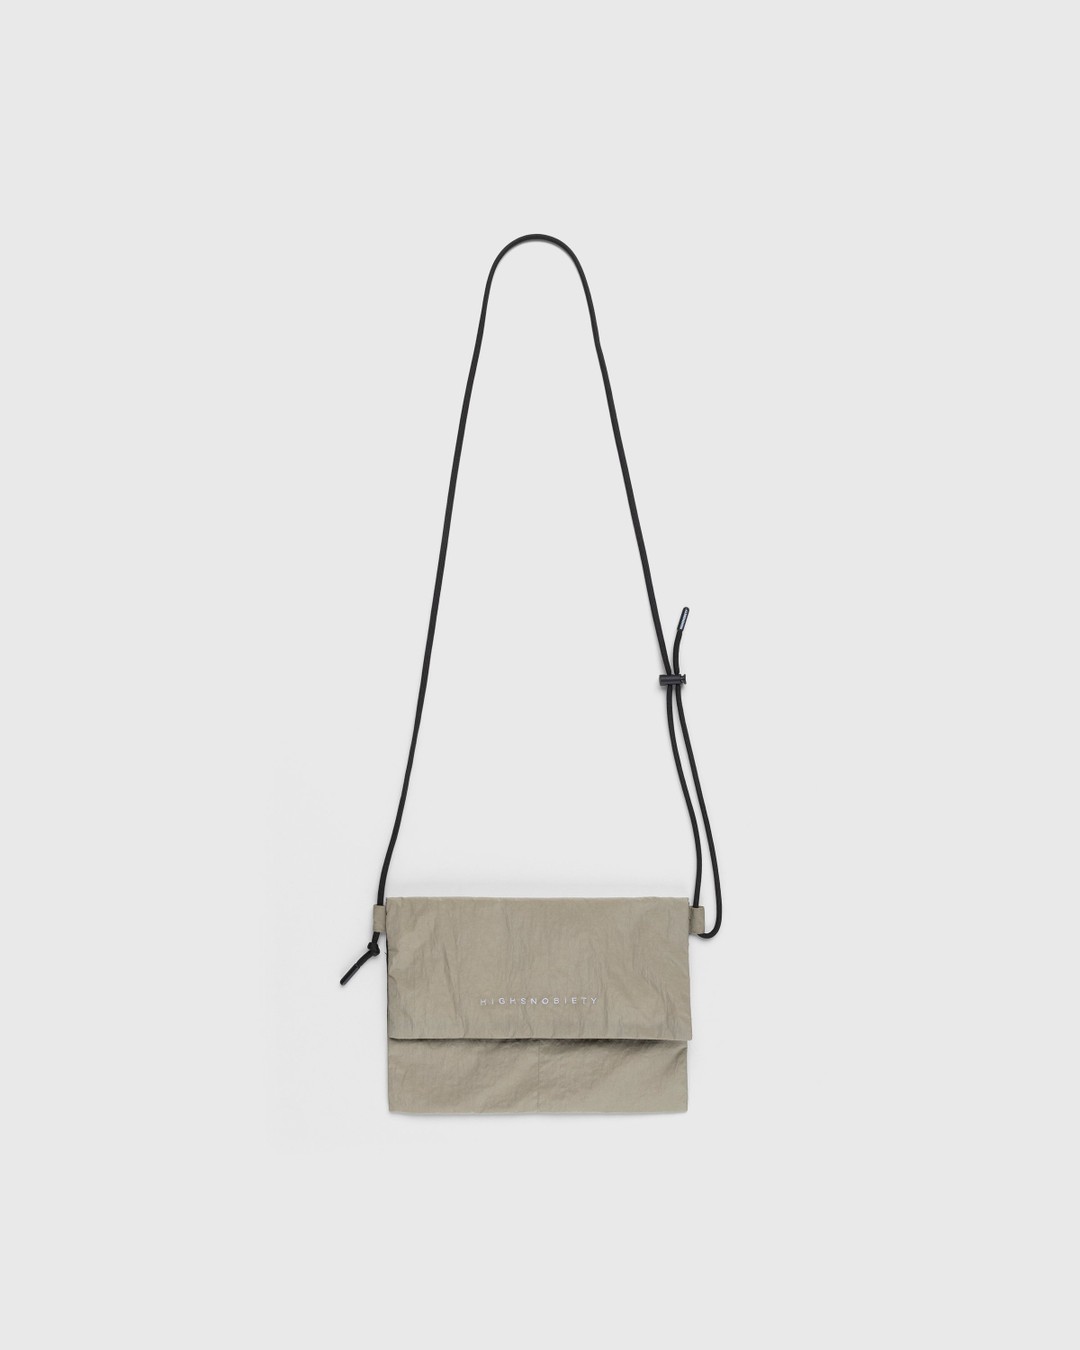 Highsnobiety – Nylon Side Bag Beige - Pouches - Beige - Image 1